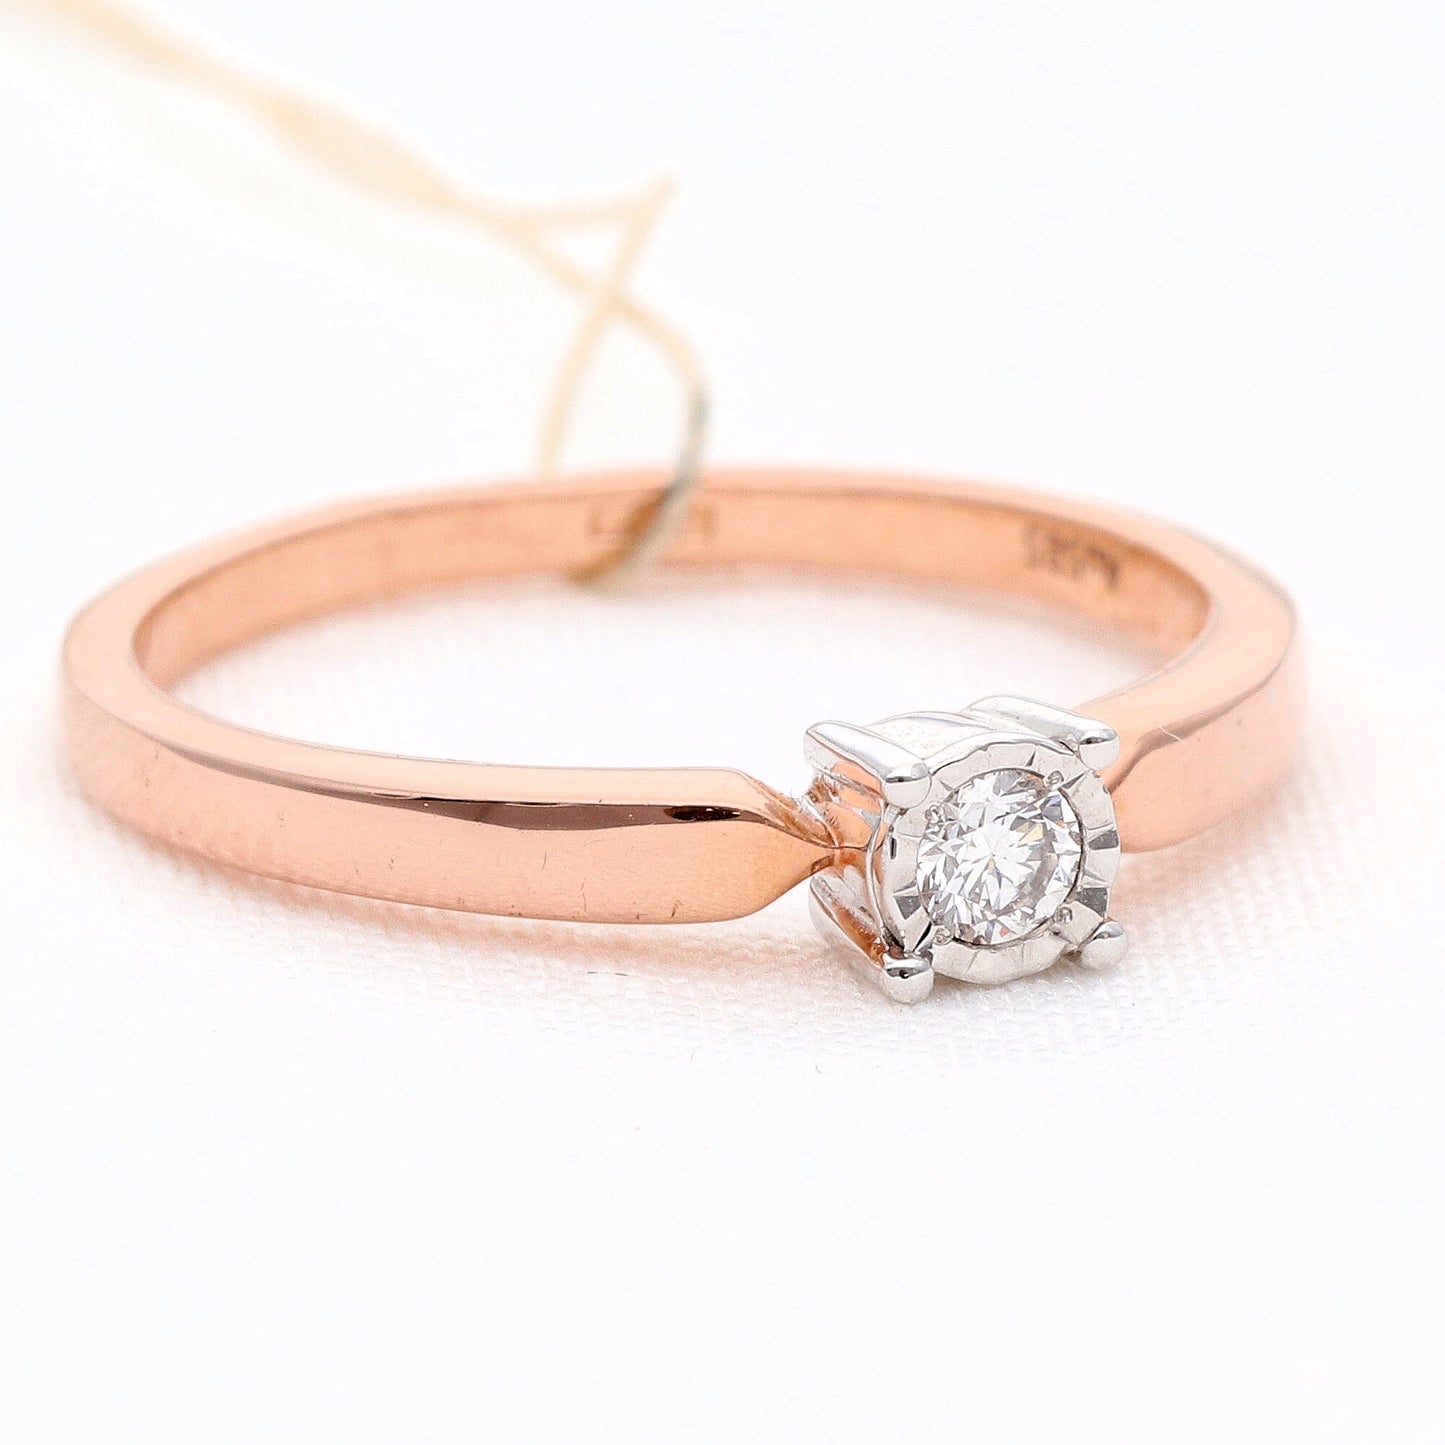 Žiedas su deimantu 0,08ct vestuviniaiziedai.lt